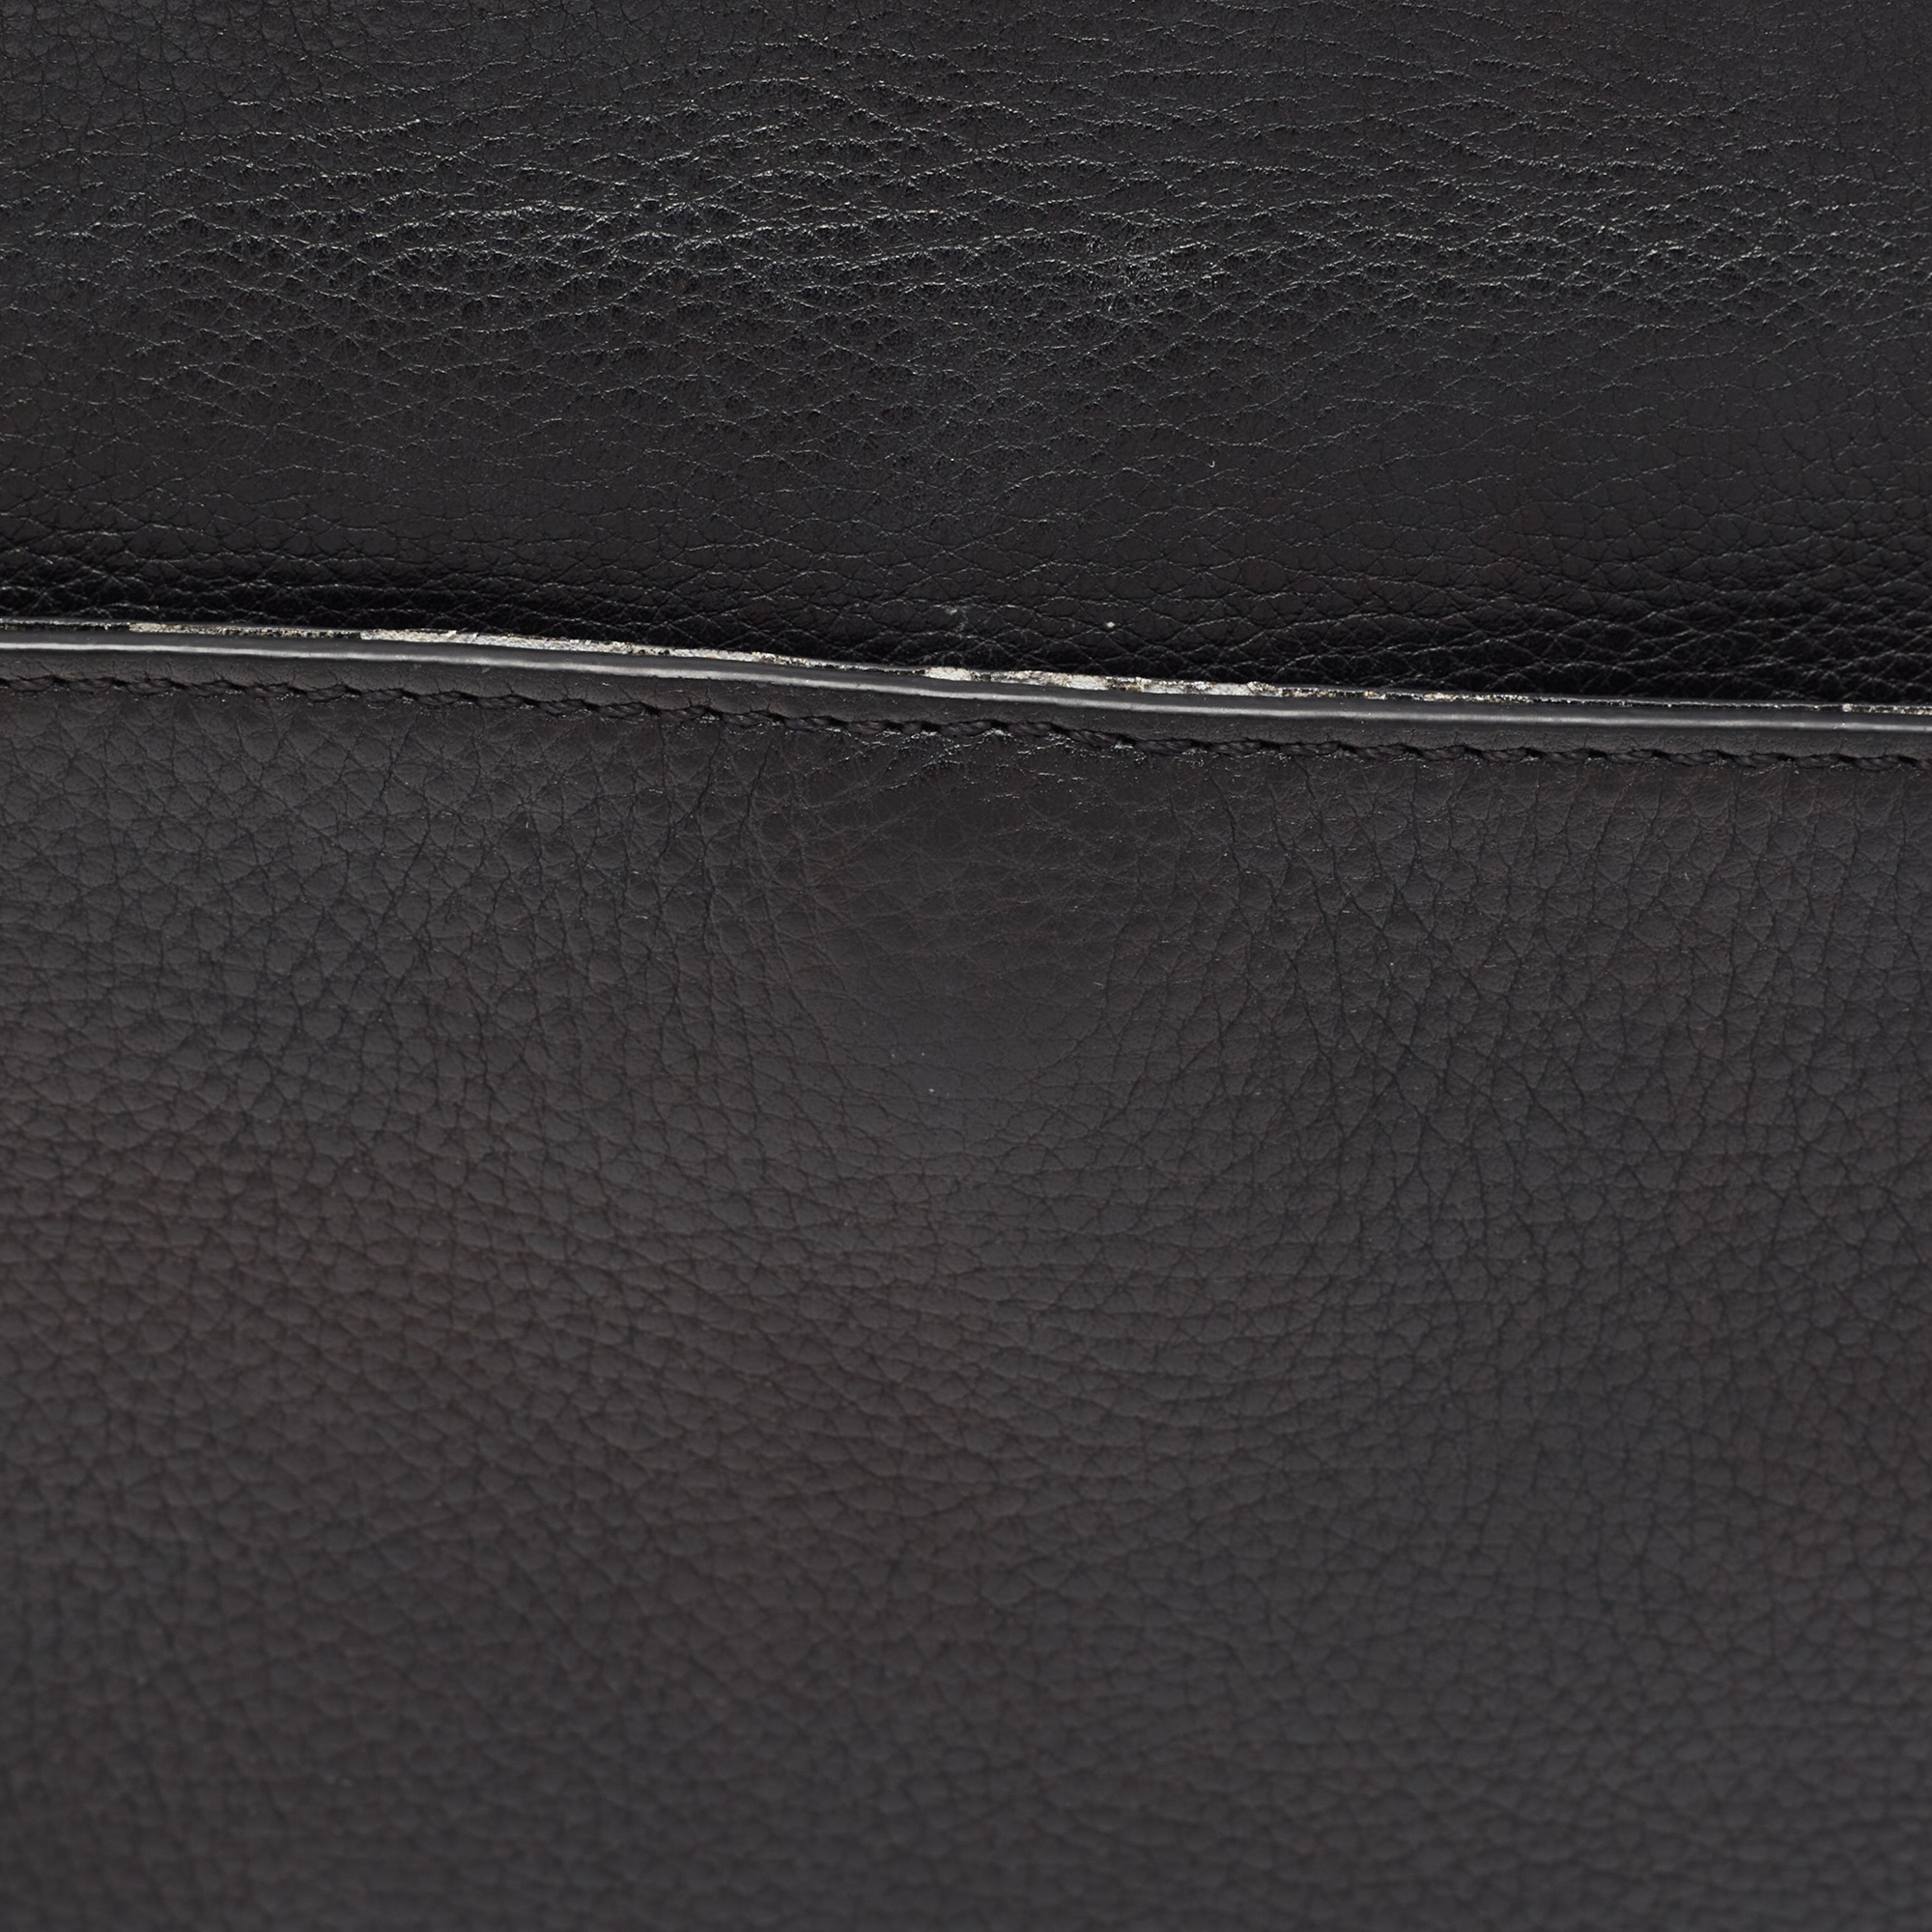 Michael Kors Black Leather And Croc Embossed Chain Shoulder Bag